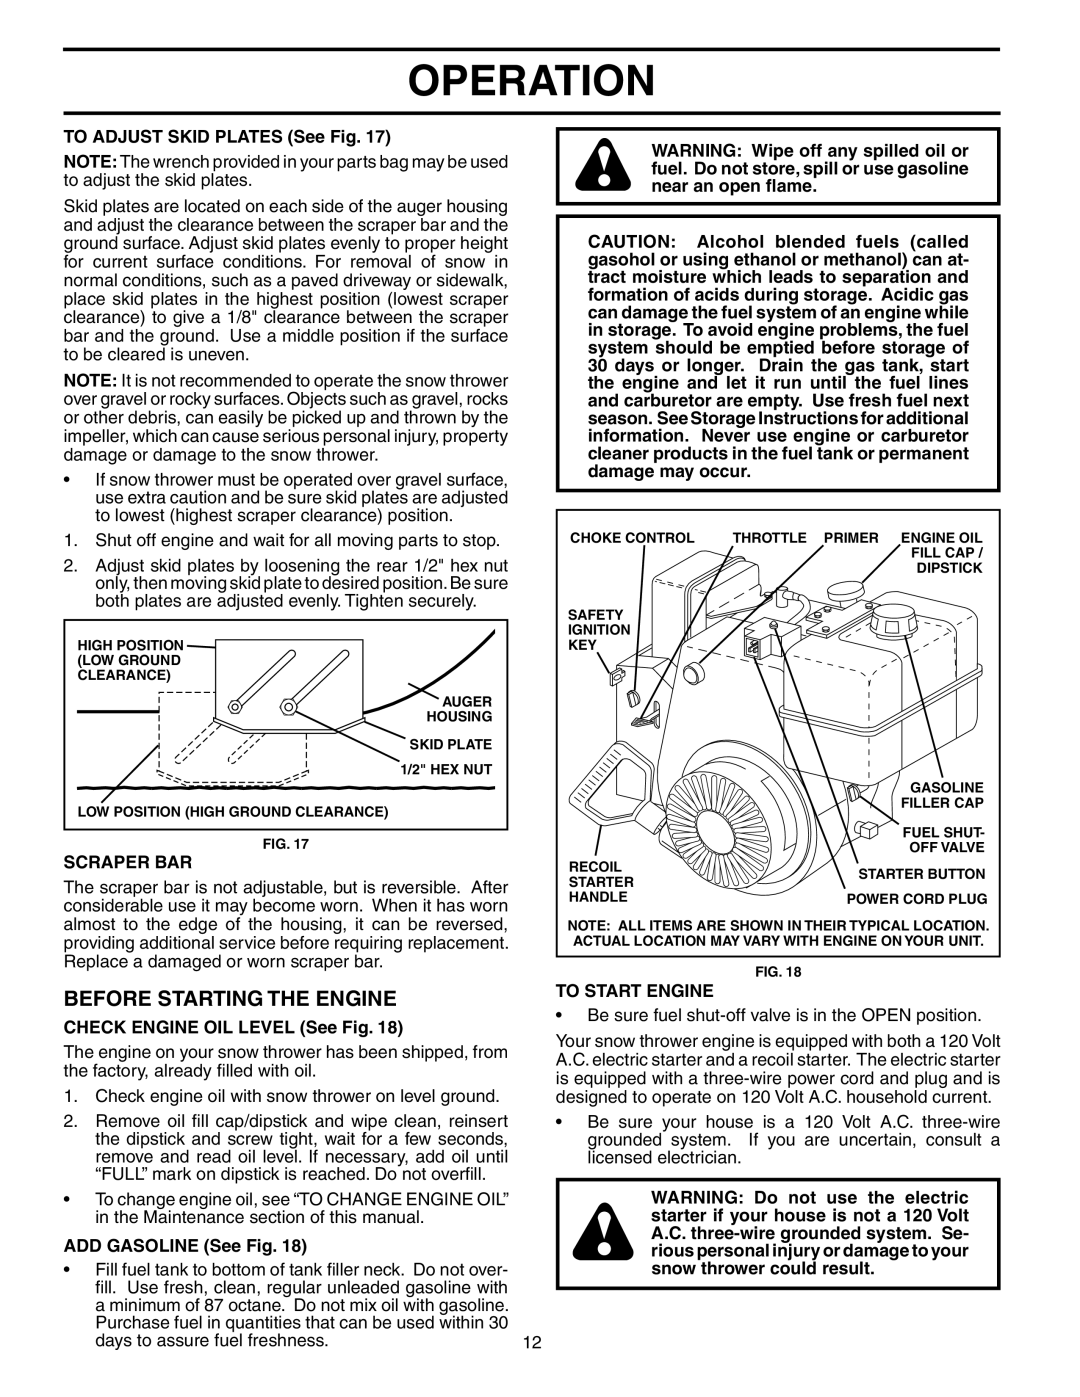 Poulan PR8527ESB owner manual Before Starting the Engine, Scraper BAR, To Start Engine 